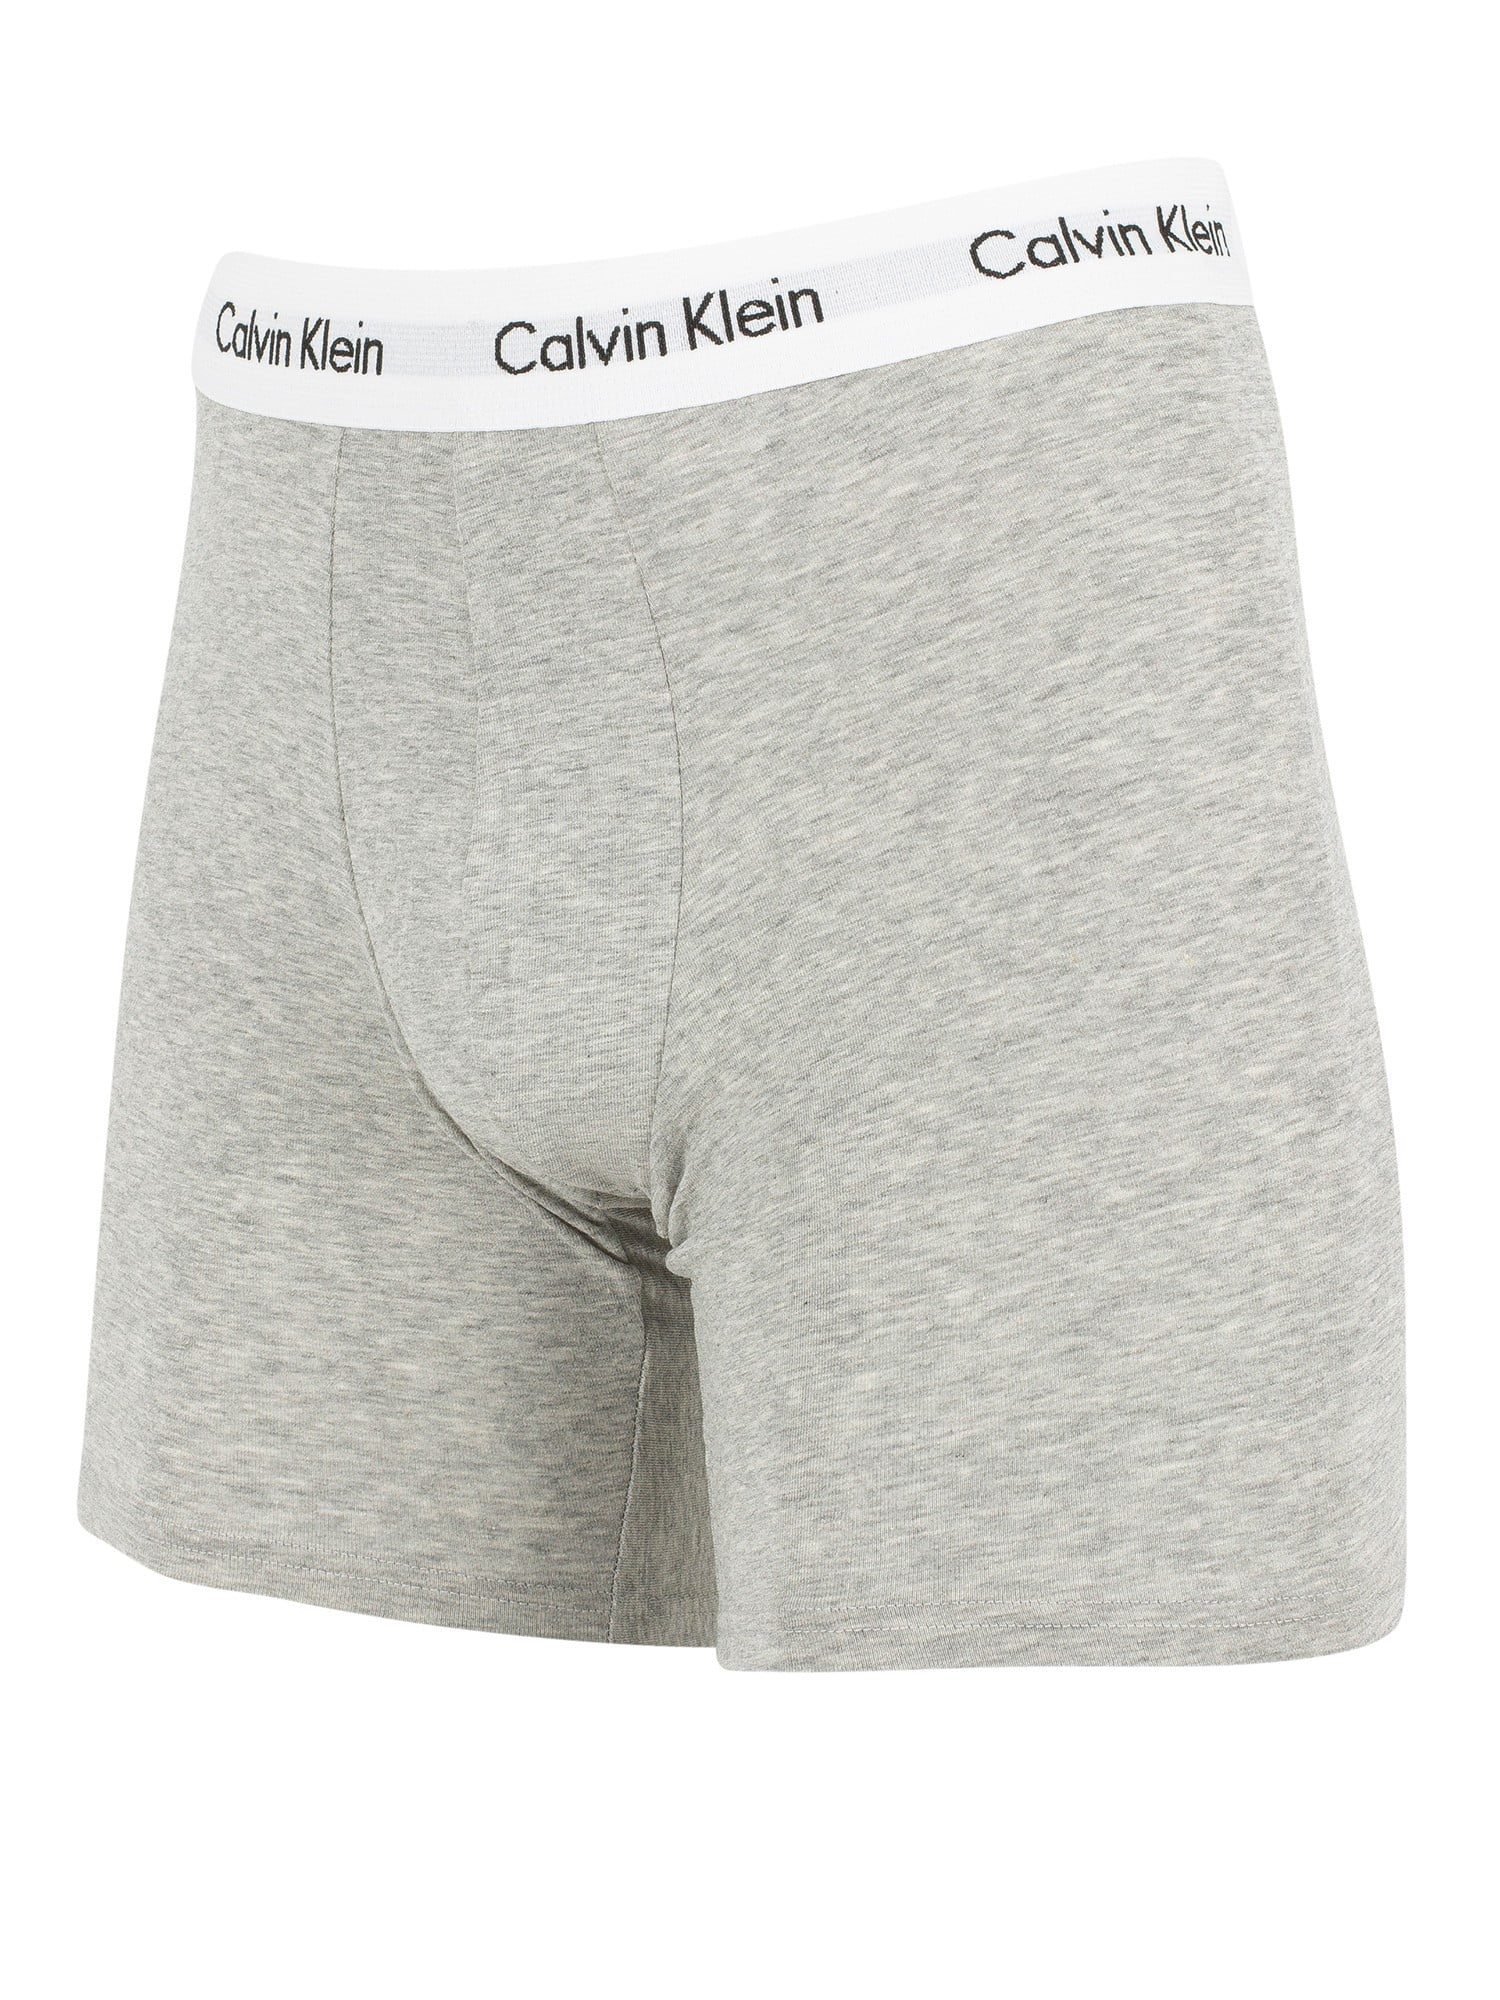 Calvin Klein Basics Button Front Boxer Brief, White